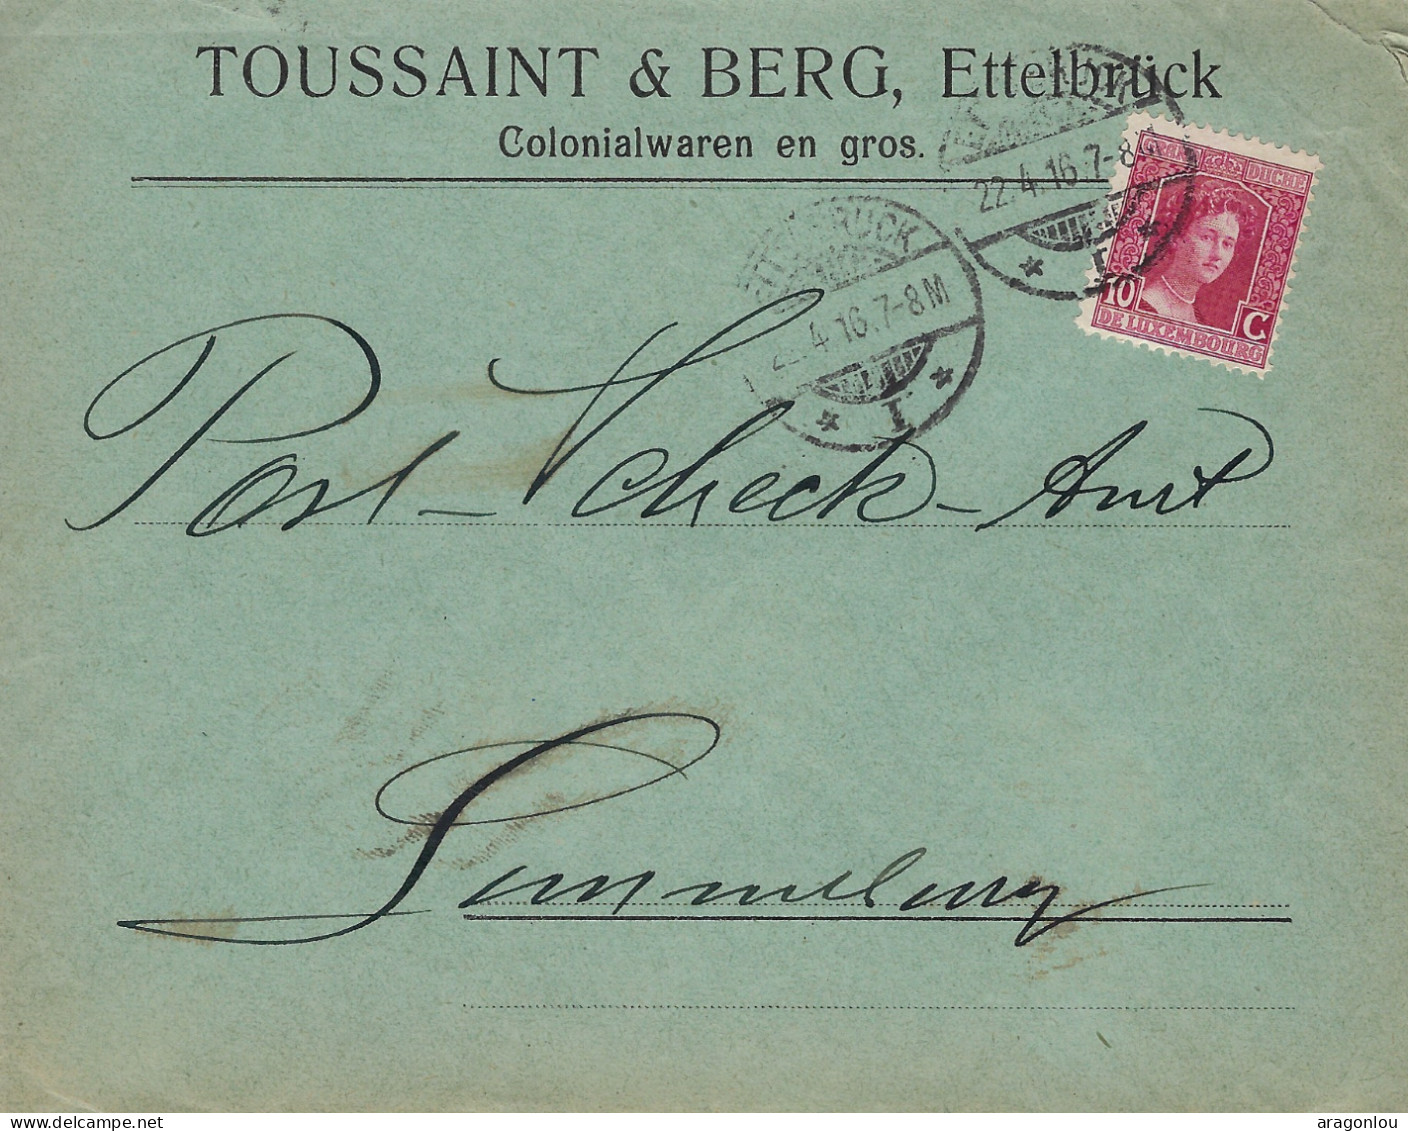 Luxembourg - Luxemburg - Lettre  1916  An Das Post -Scheck-Amt , Luxembourg- Cachet Luxembourg - Brieven En Documenten